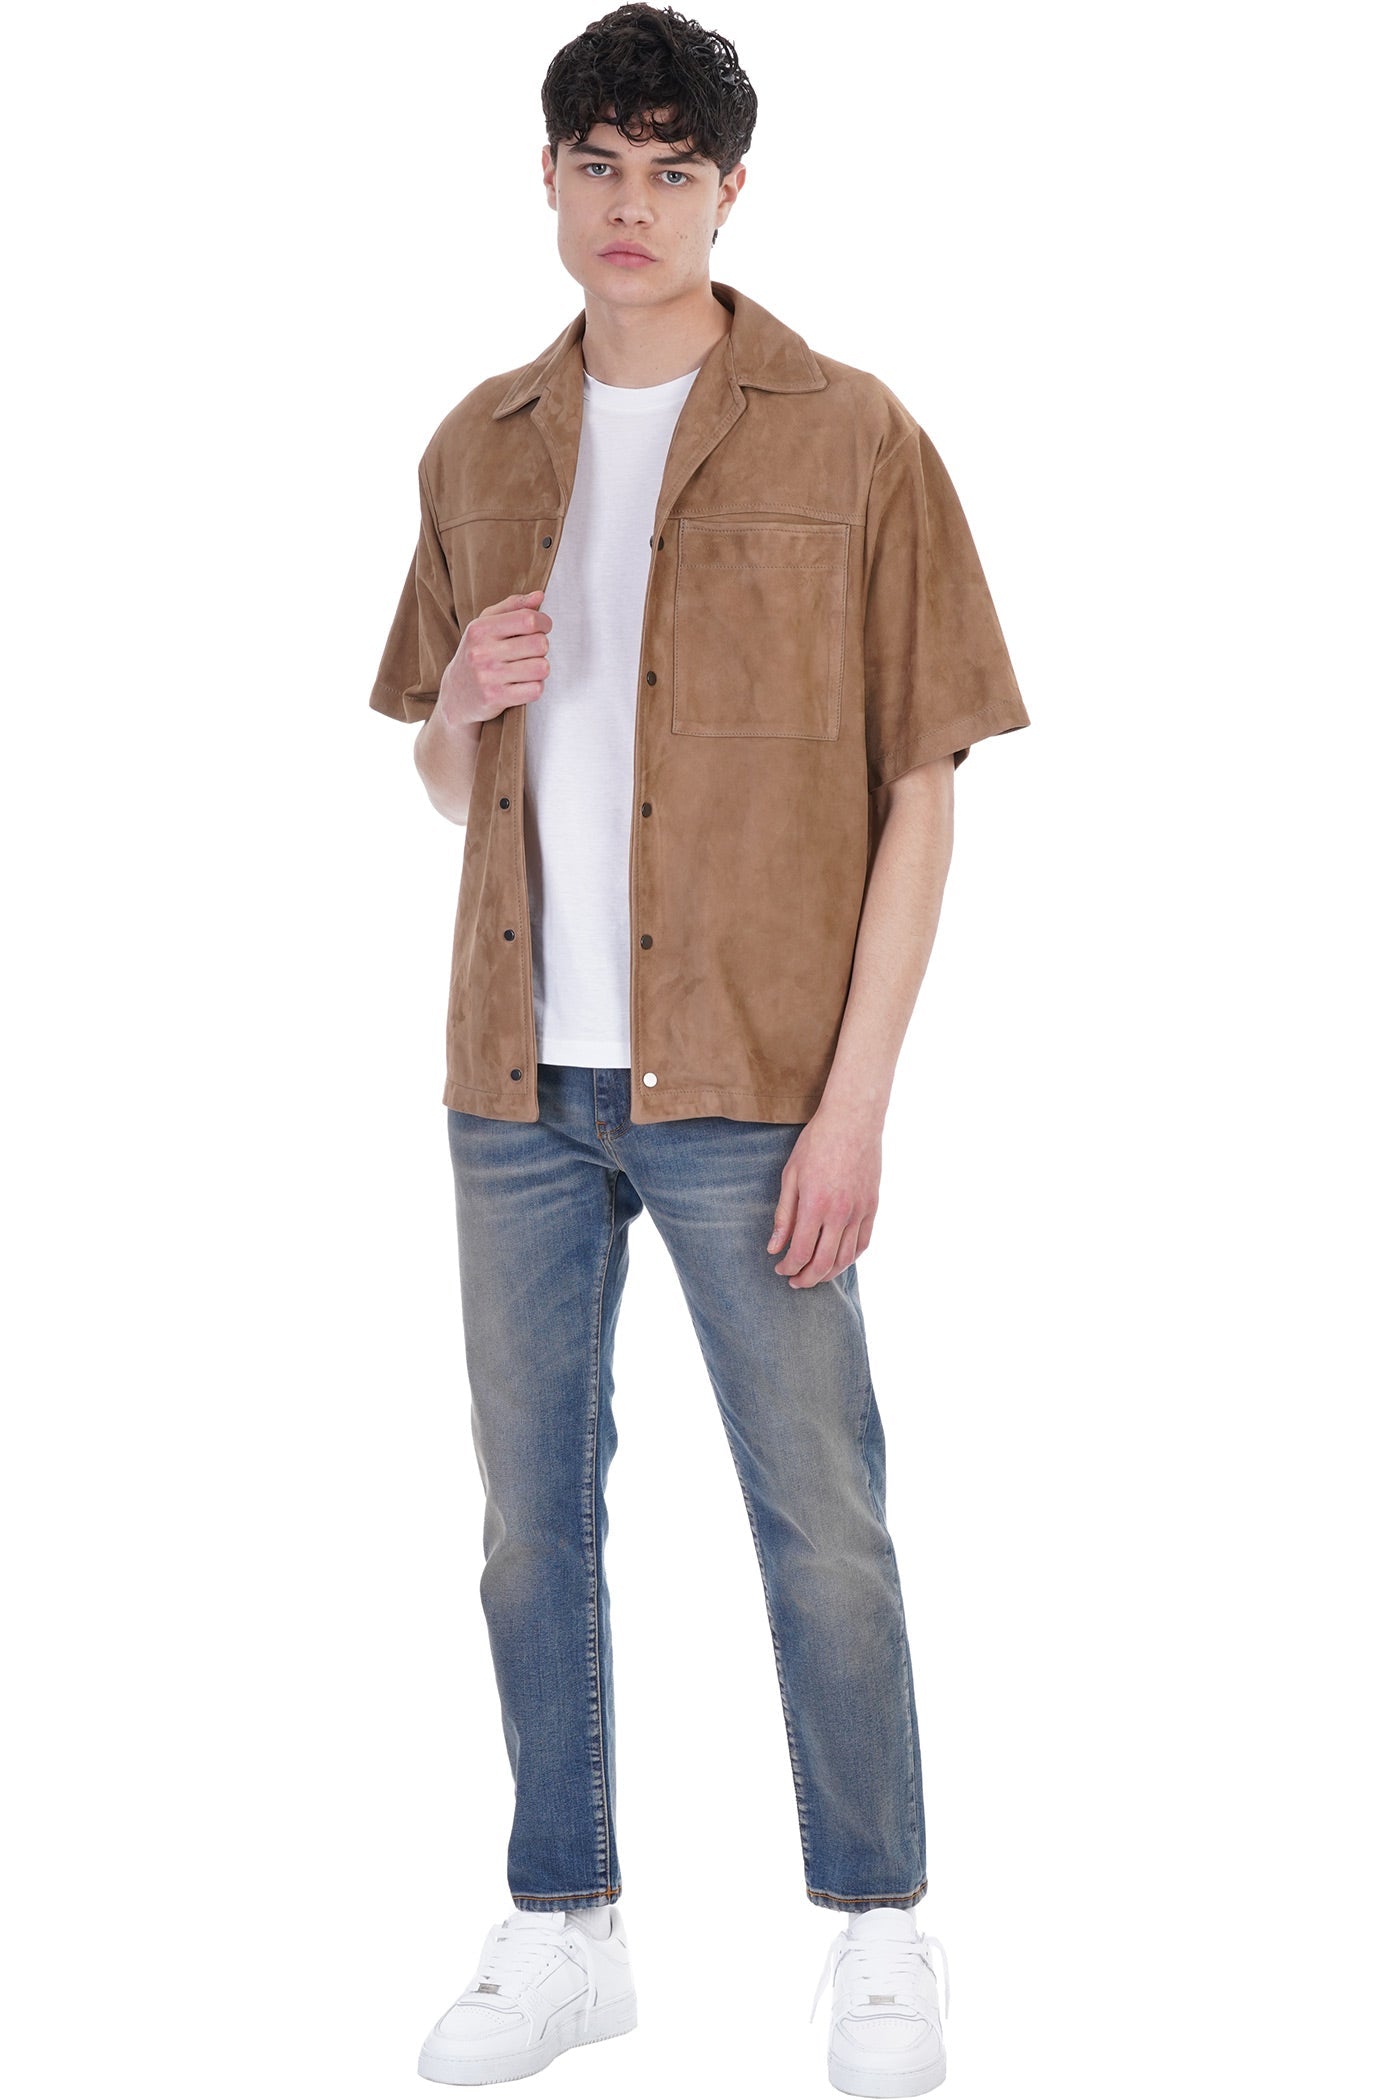 Men's Half Sleeve Suede Leather Shirt In Tan Brown